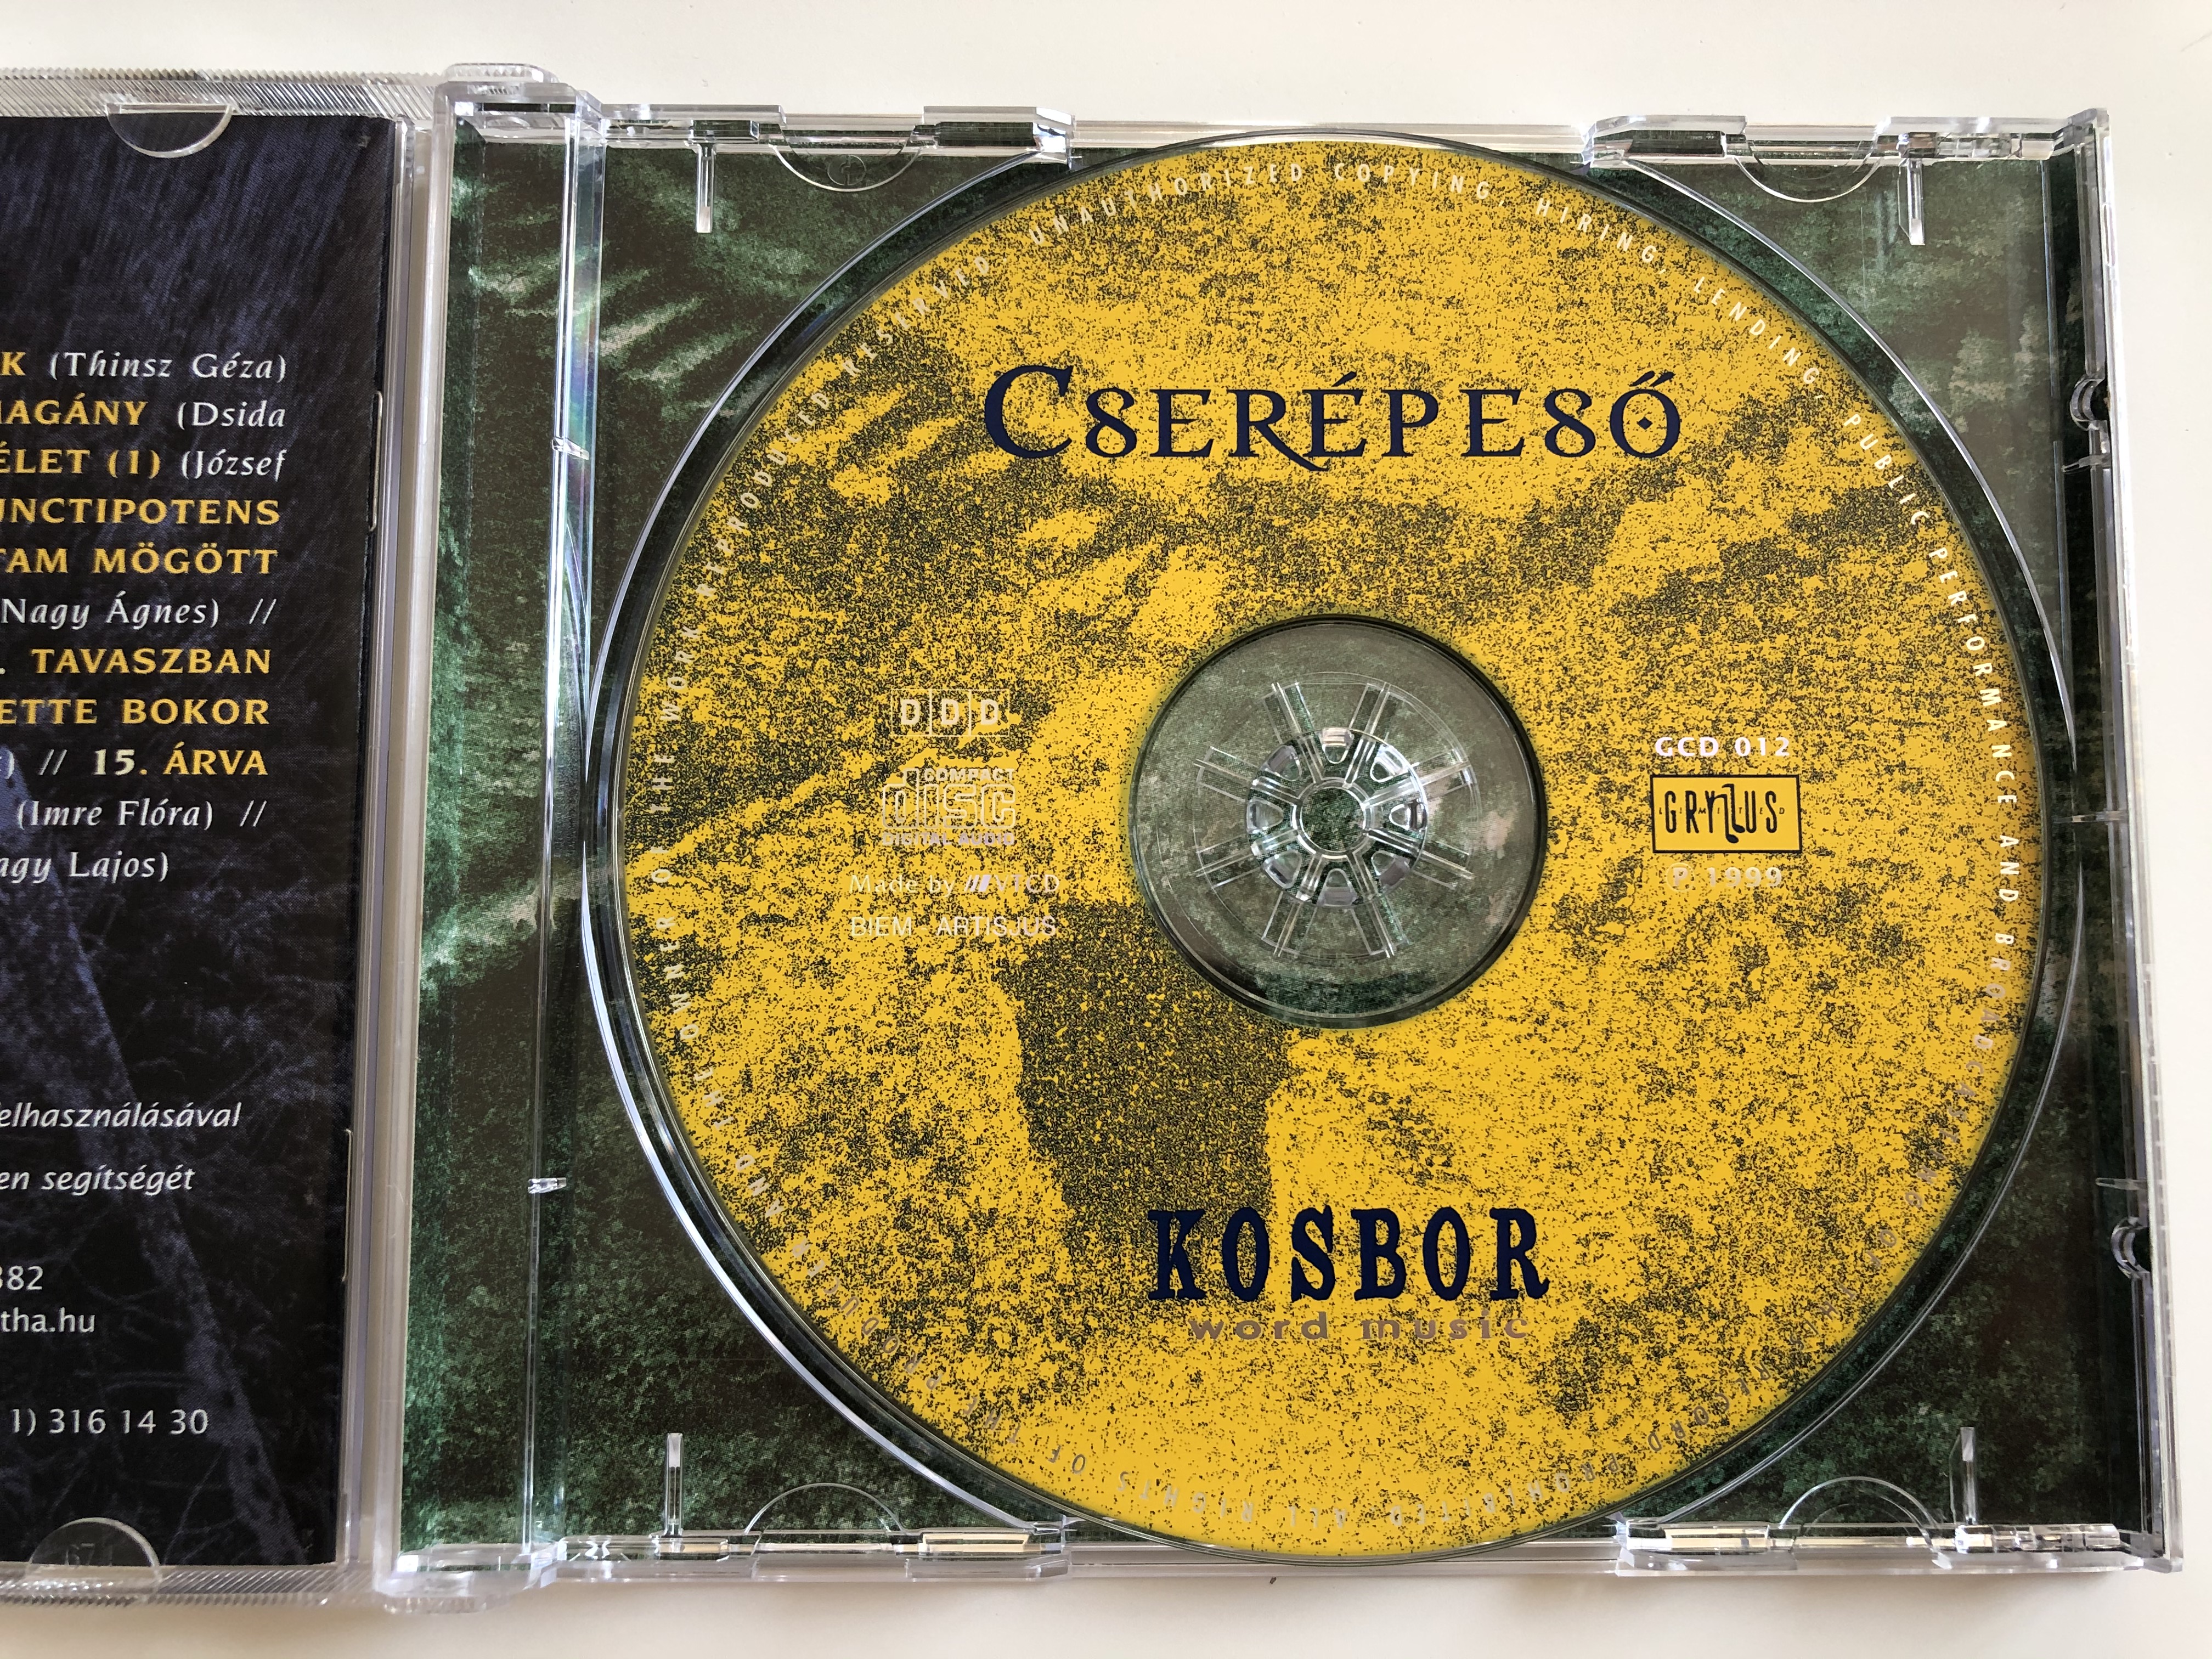 kosbor-cser-pes-gryllus-audio-cd-1999-gcd-012-8-.jpg